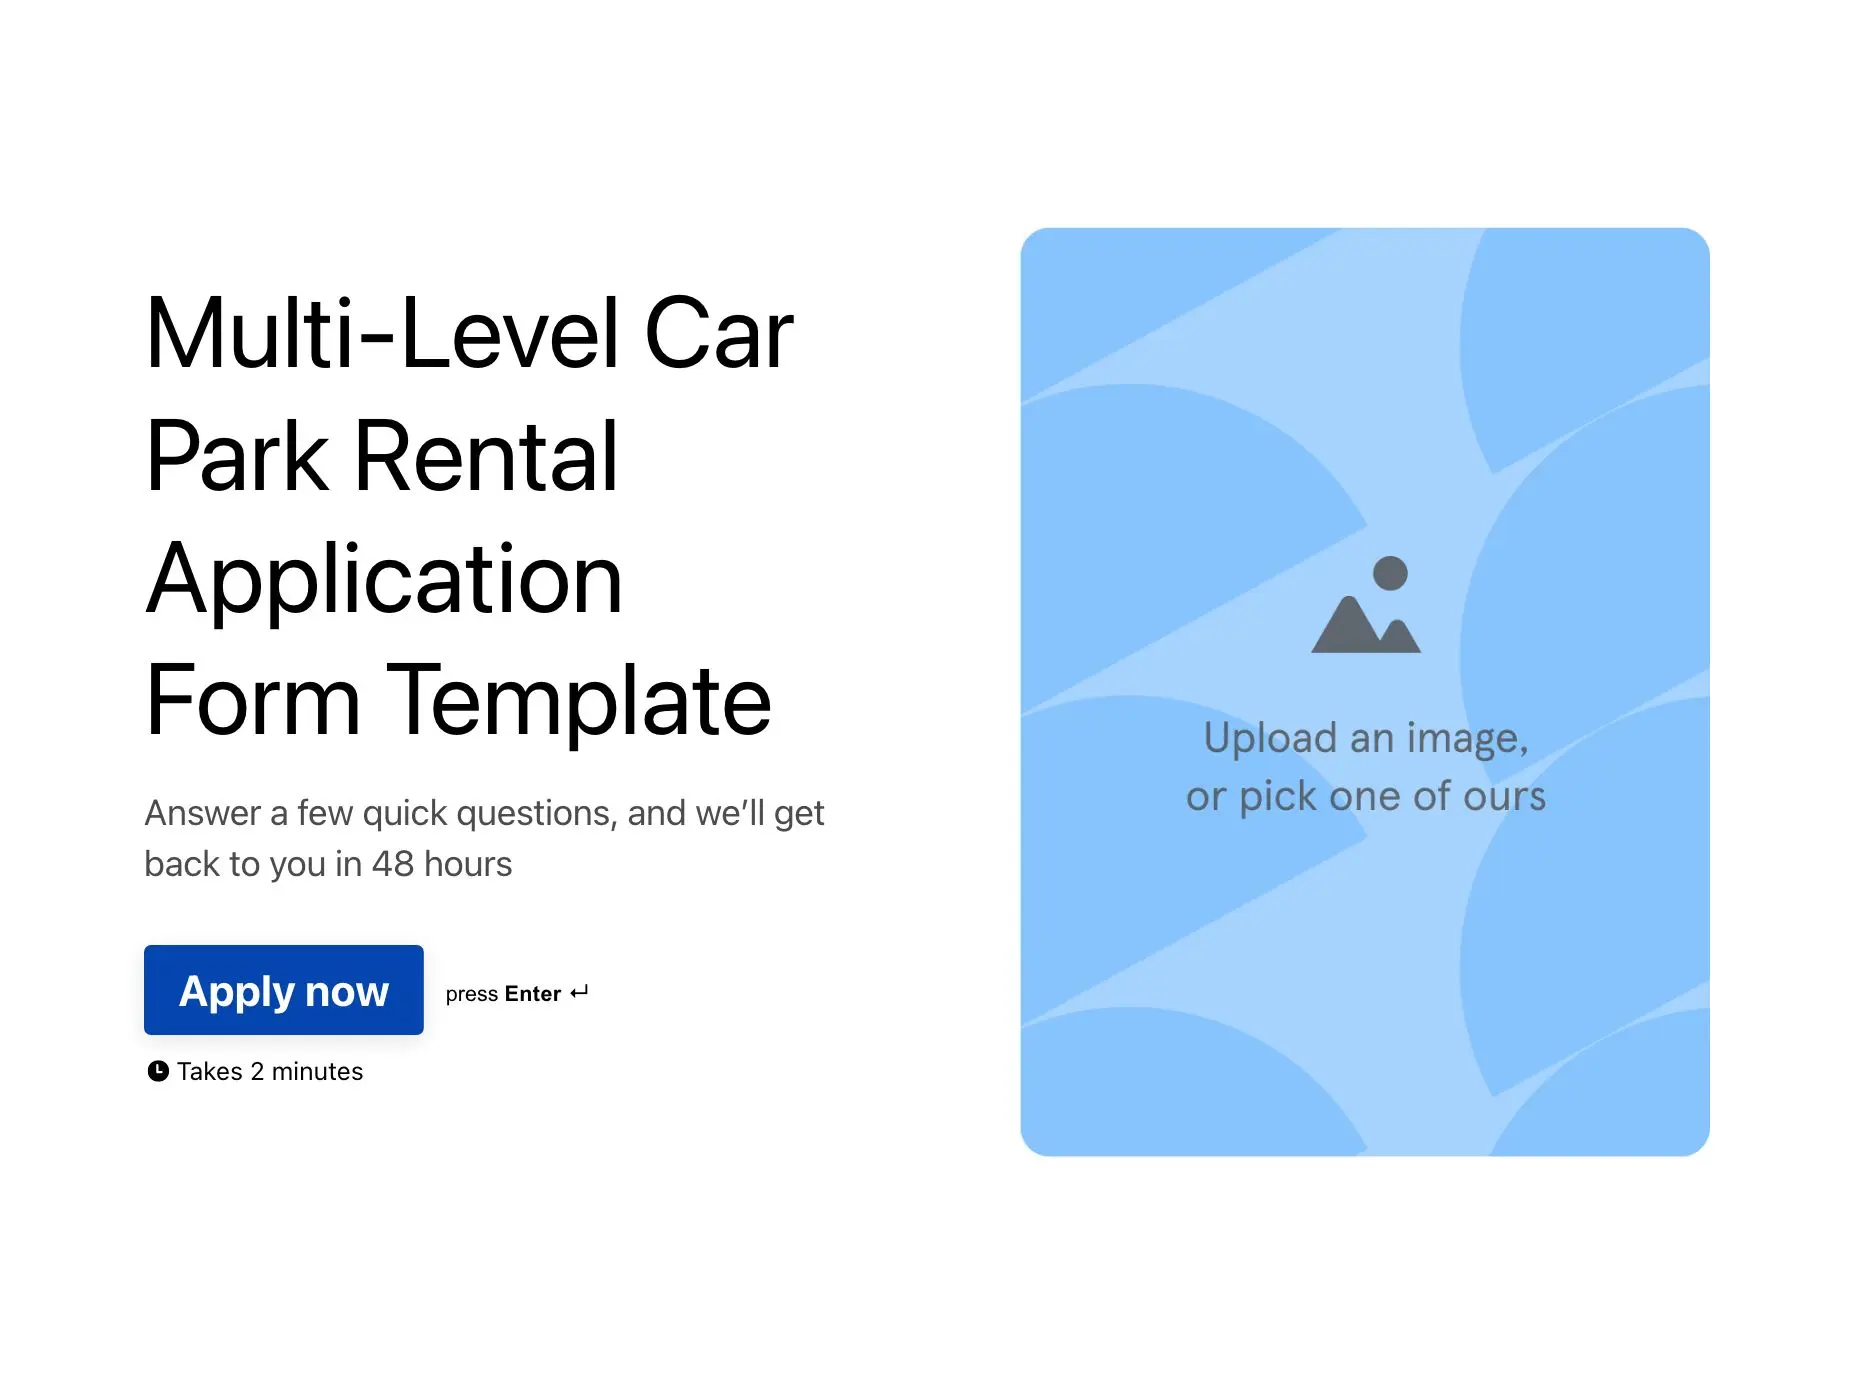 Multi-Level Car Park Rental Application Form Template Hero